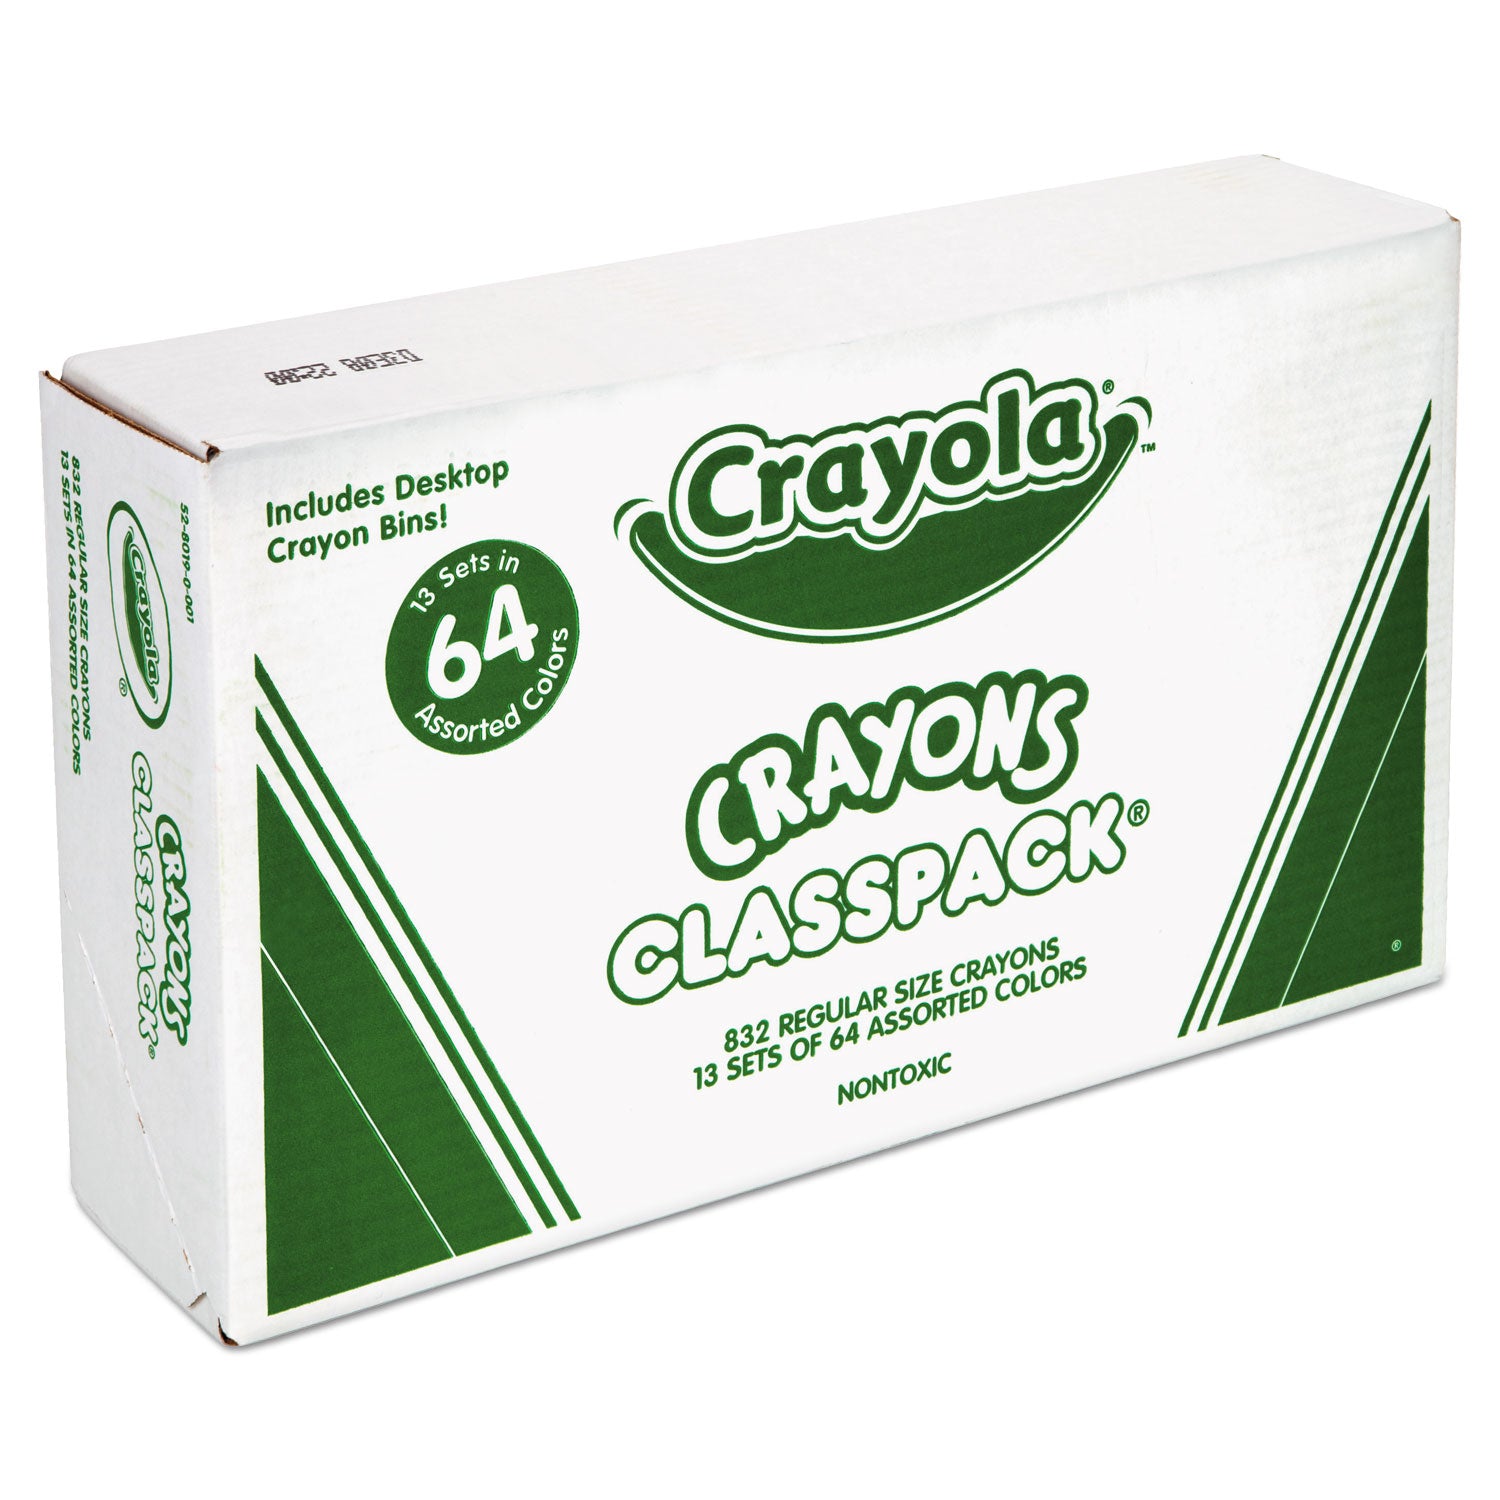 Classpack Regular Crayons, Assorted, 13 Caddies, 832/Box - 